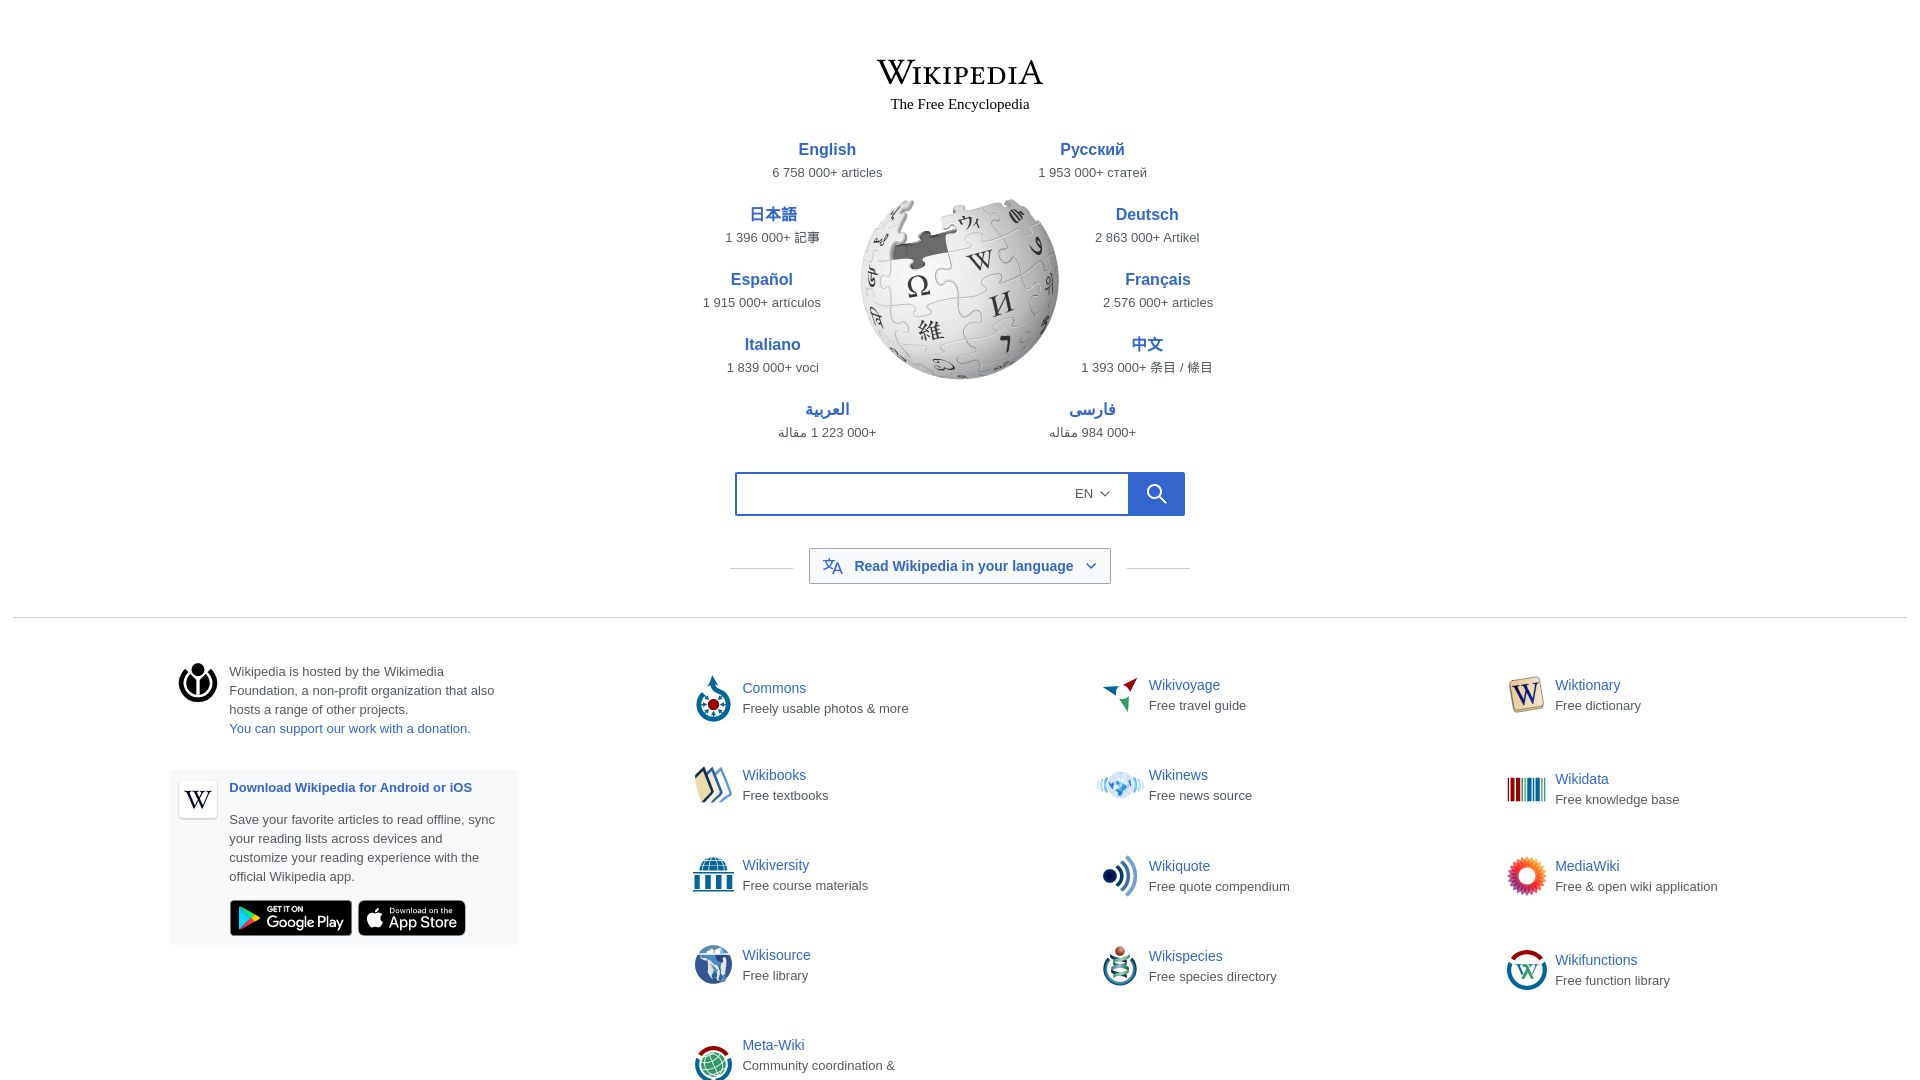 Website status wikipedia.org is   ONLINE